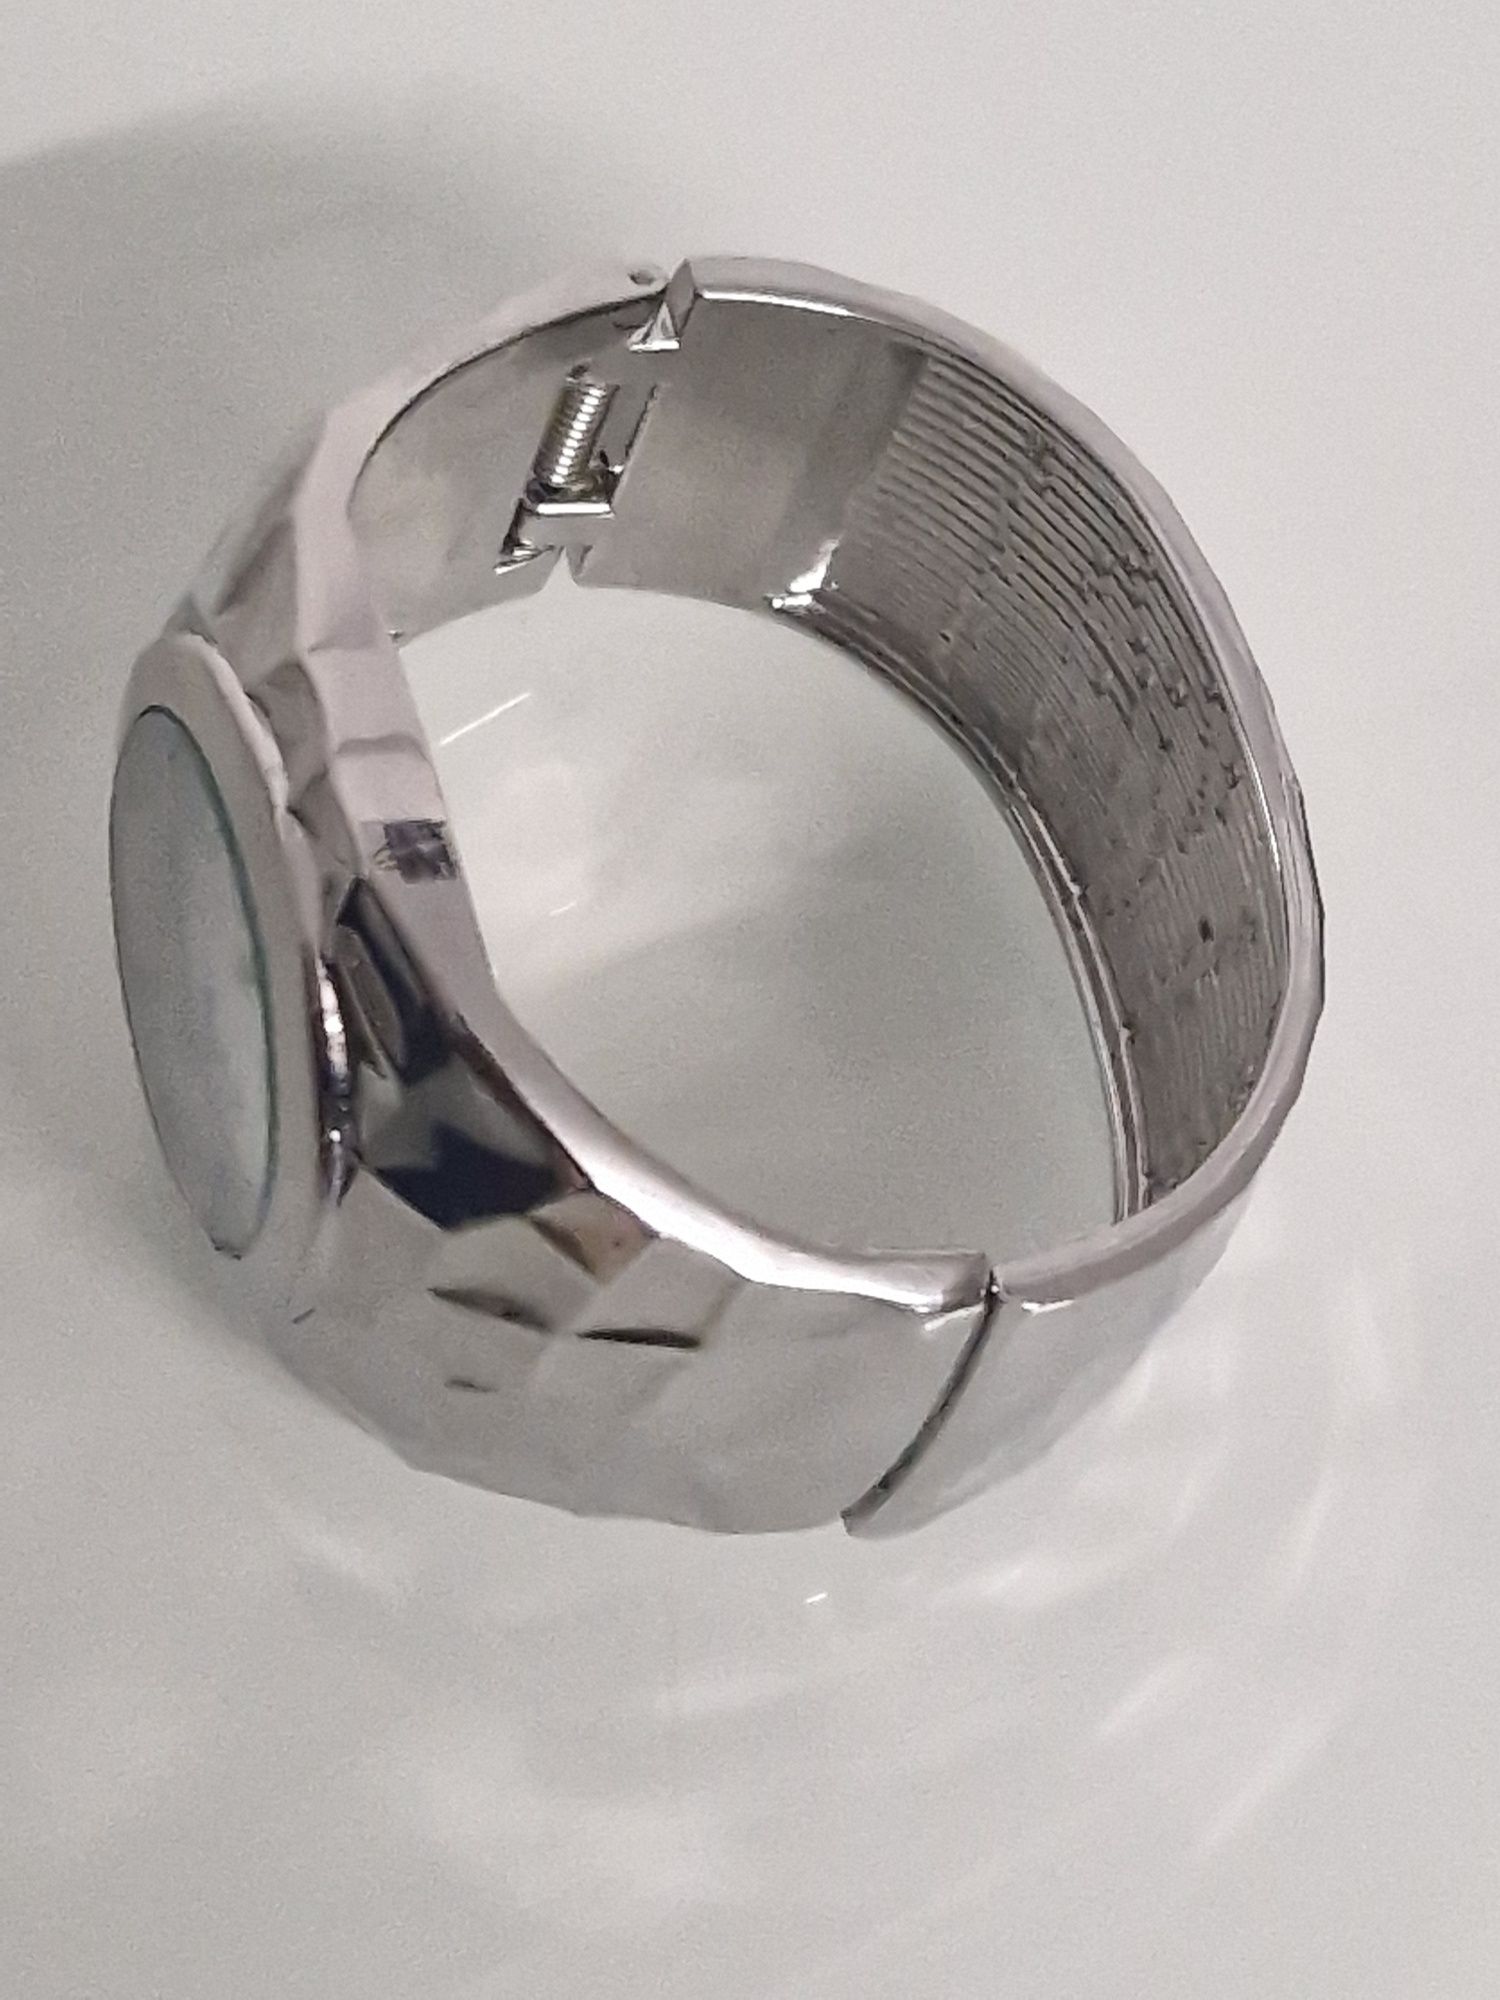 Relógio Silver - Jewelry Designer Cristian Lay